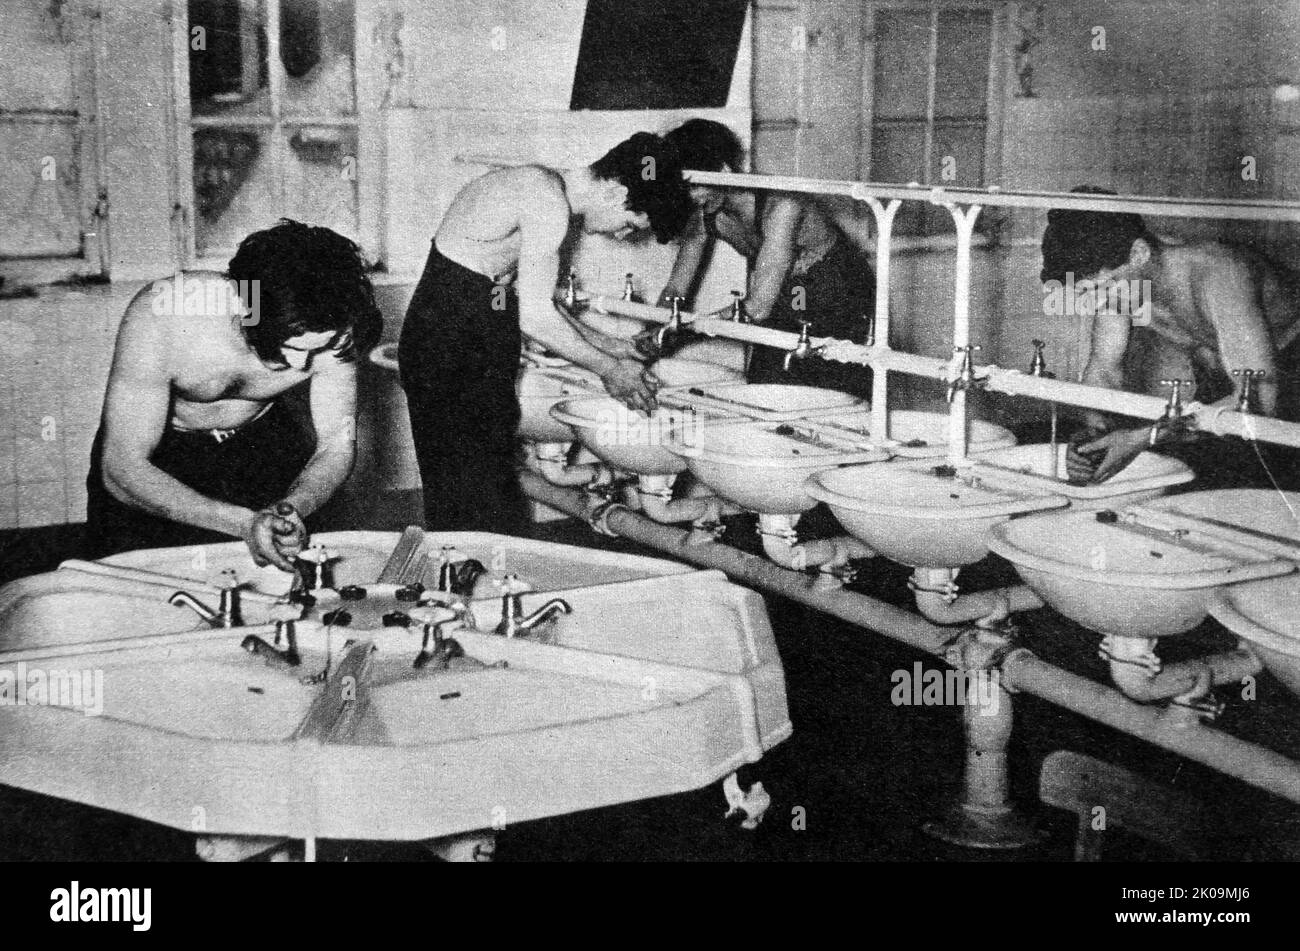 Captives using special washrooms at Wulzburg German prisoner of war camp during World War II. Stock Photo